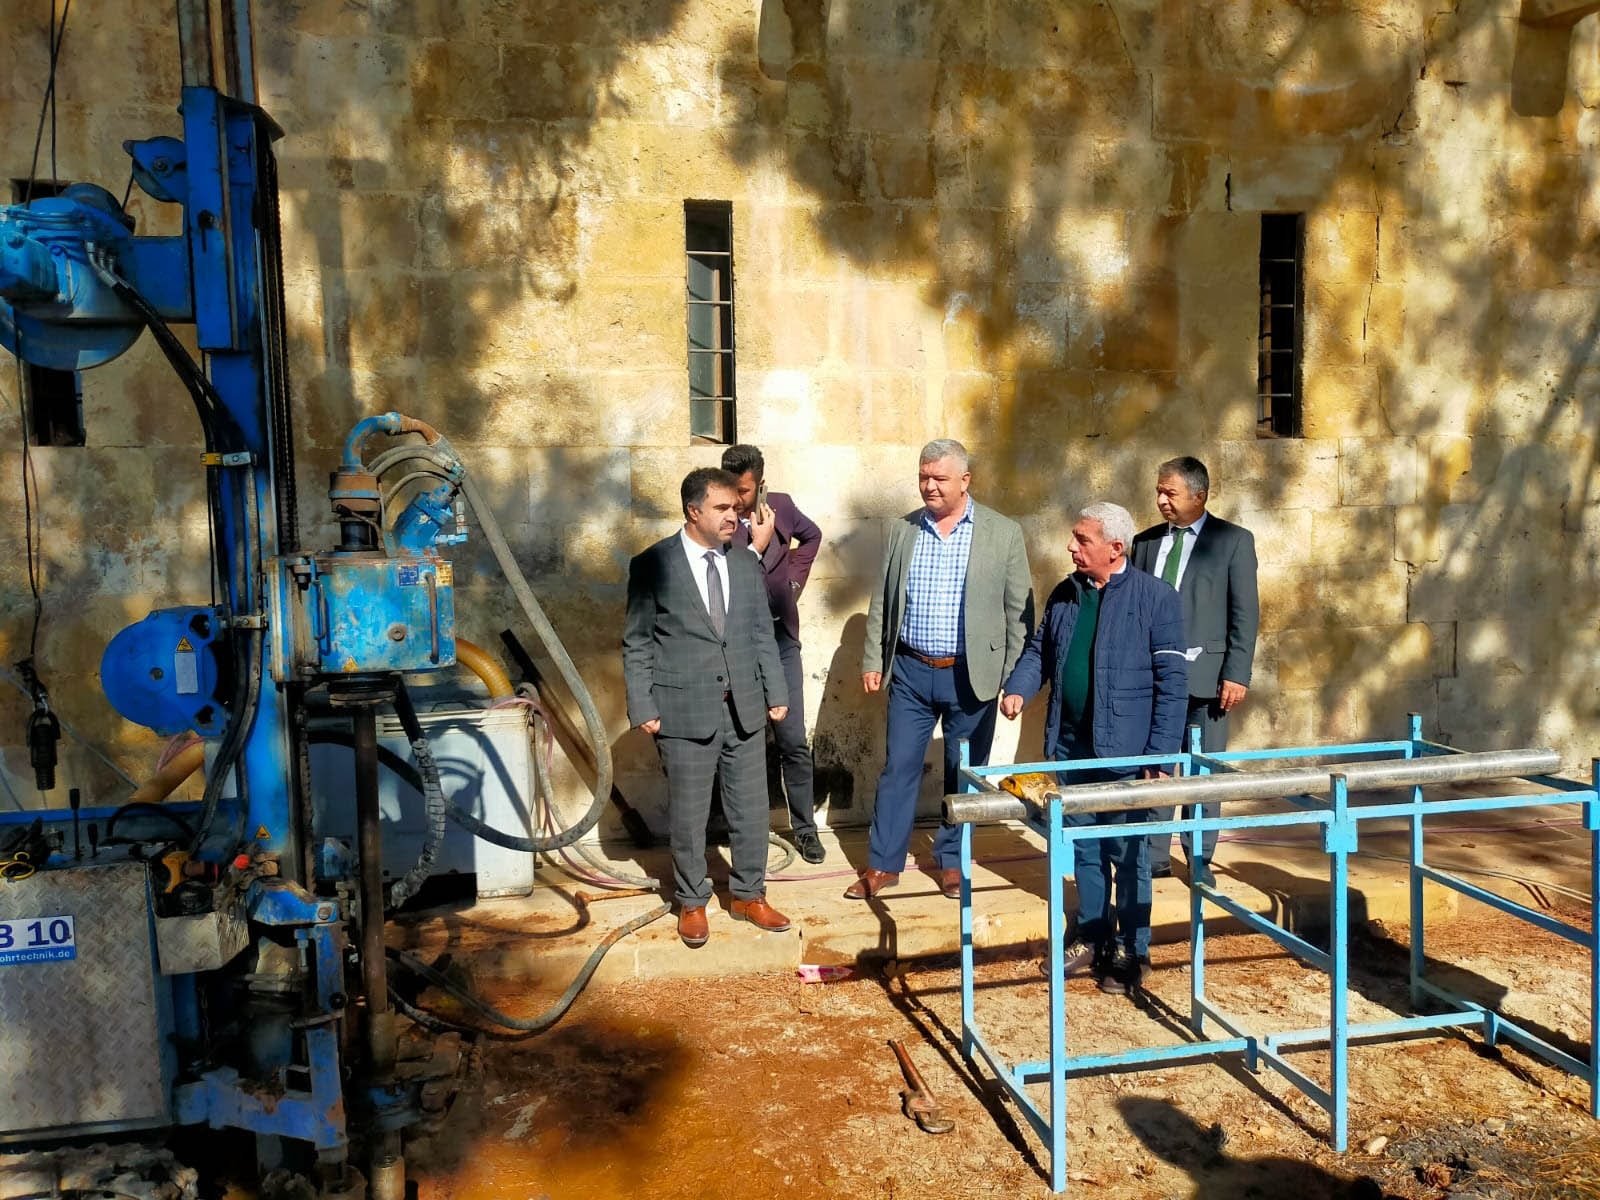 A work machine, worker and officials as restoration works continue at the Tol Madrassa in Ermenek province, Karaman, Turkey, Nov. 16, 2021. (DHA Photo)